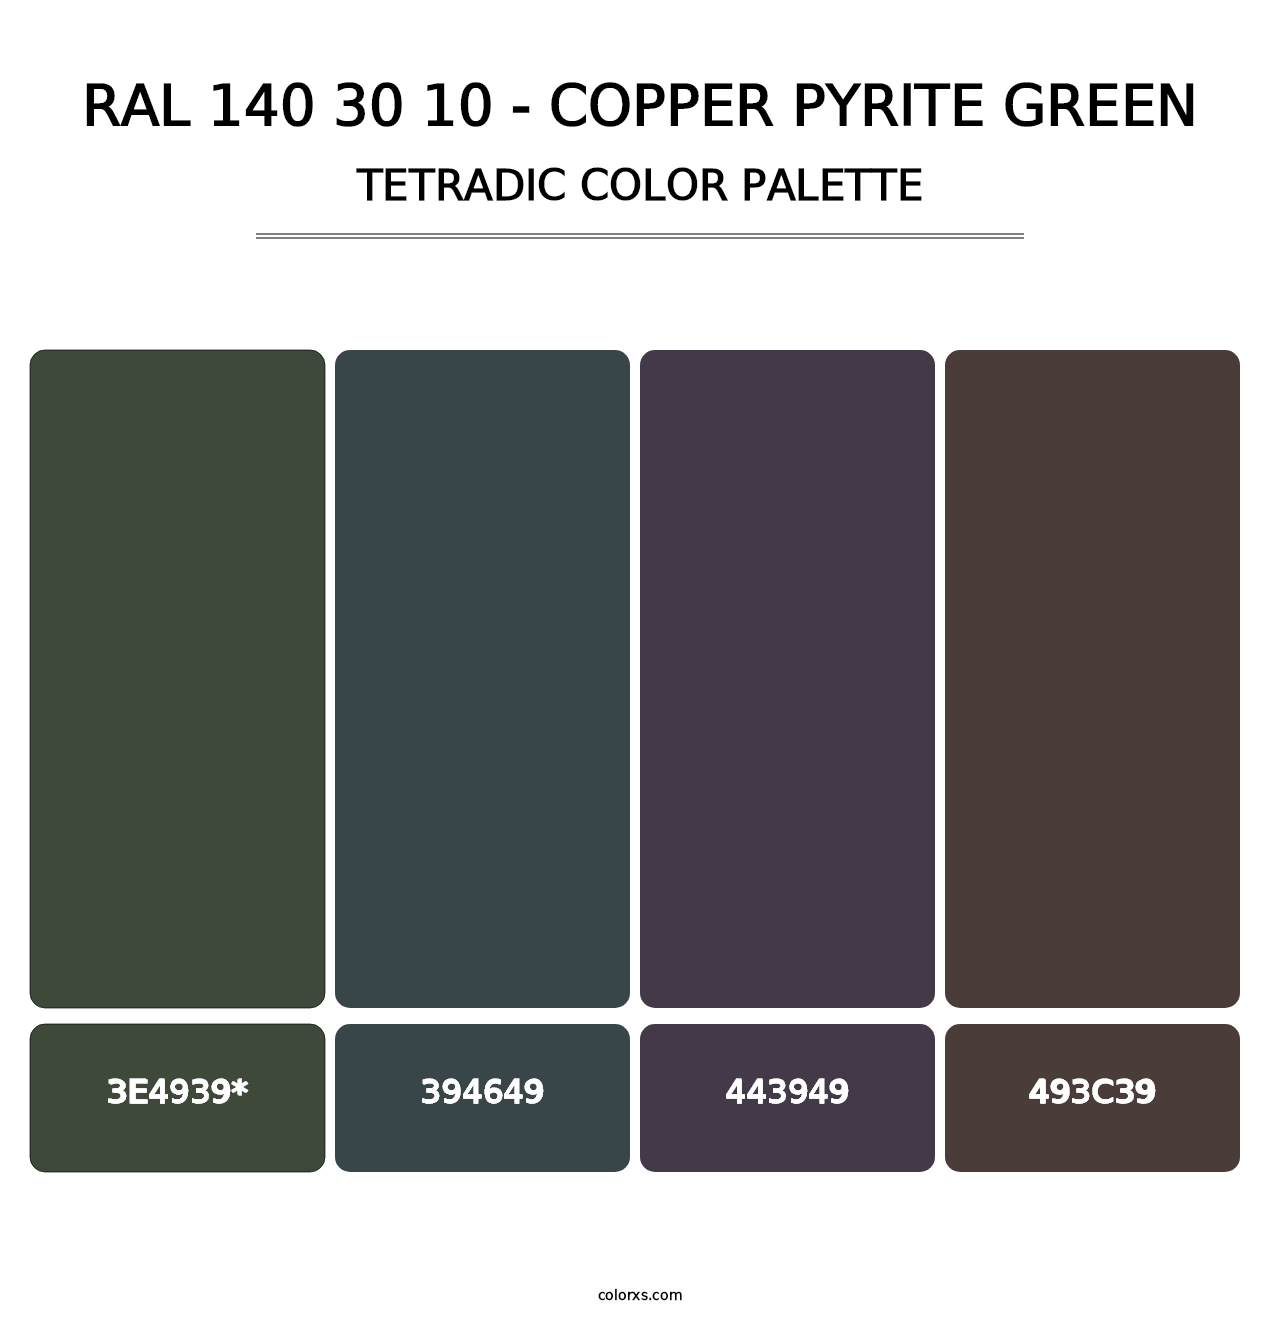 RAL 140 30 10 - Copper Pyrite Green - Tetradic Color Palette